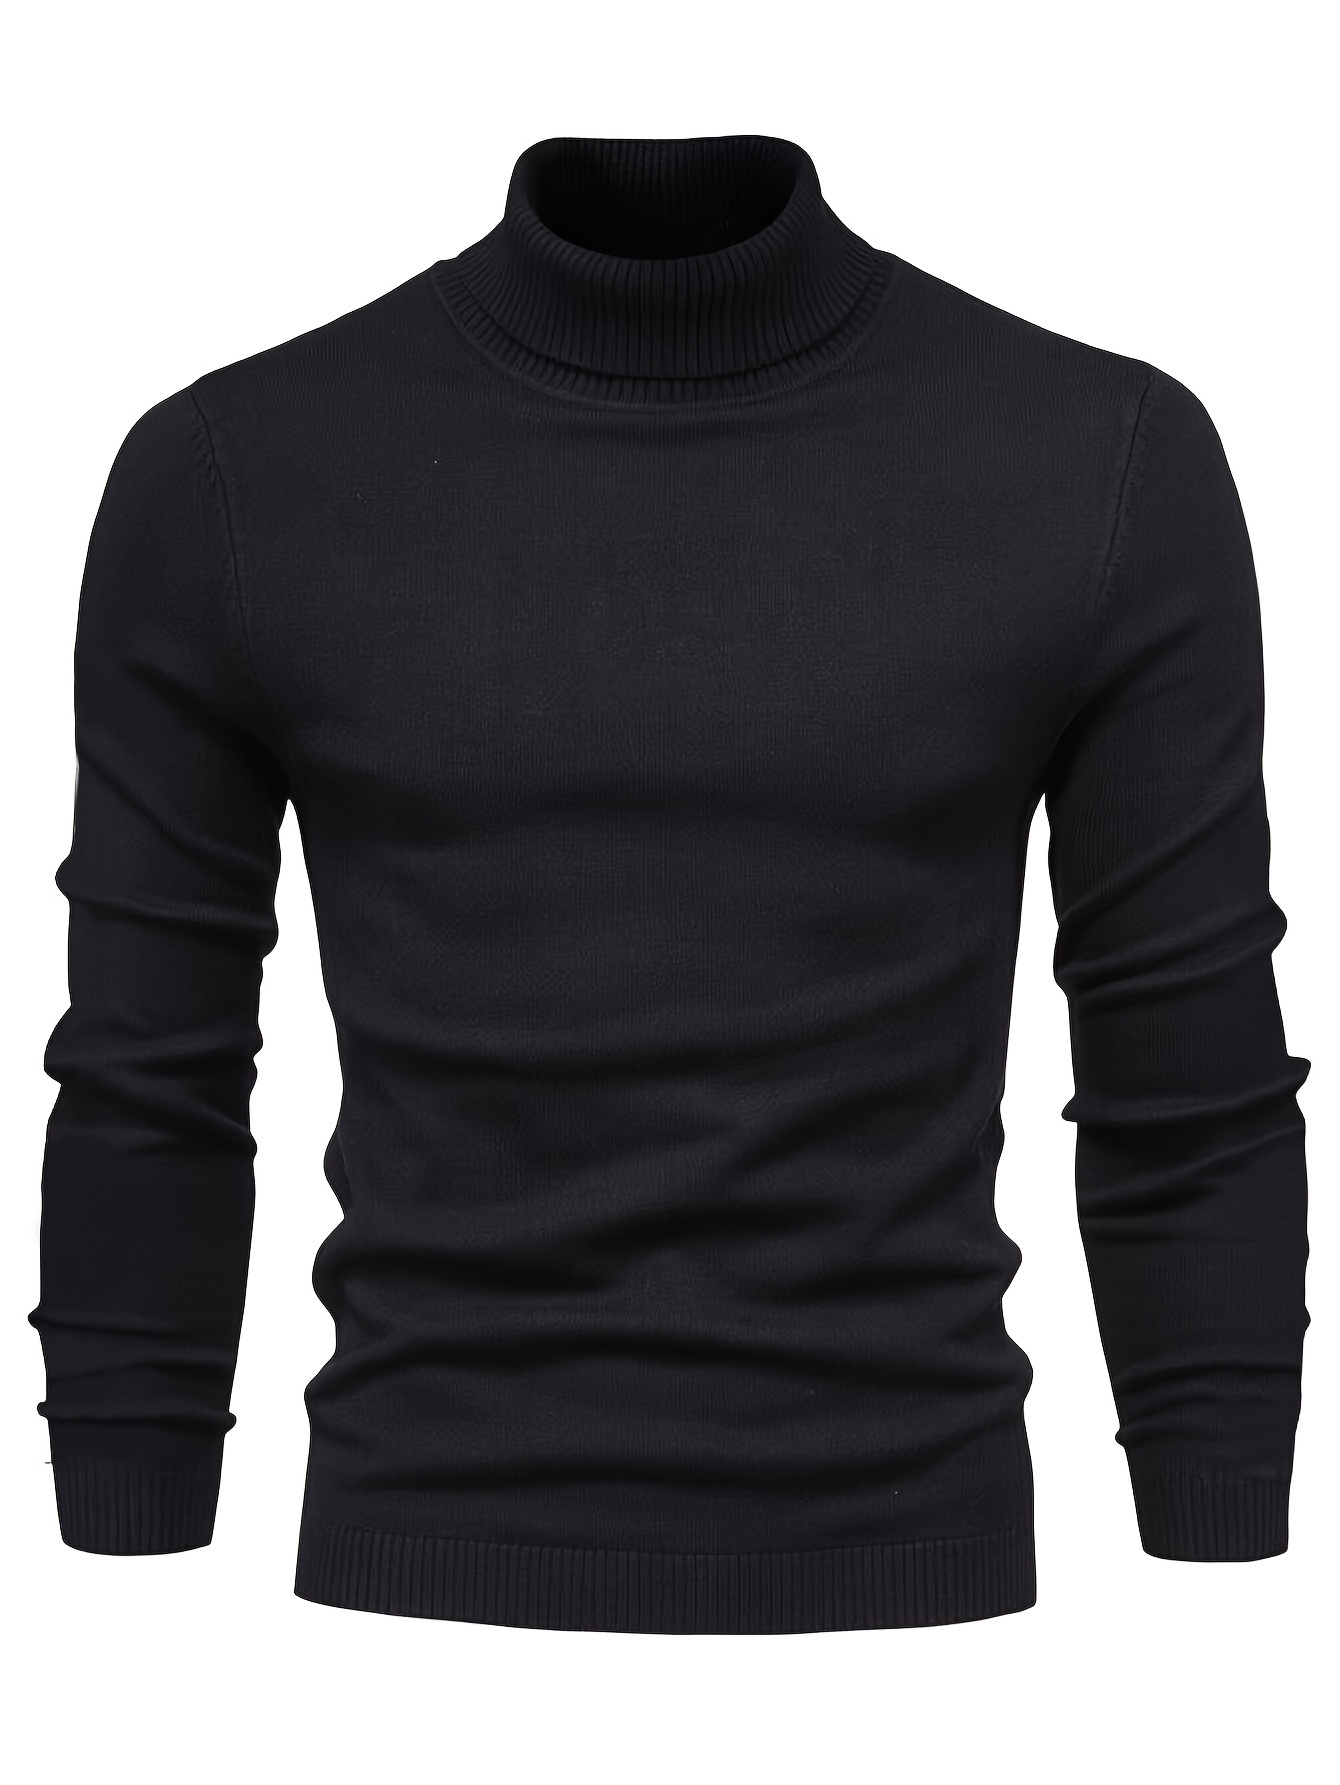 Winter Thermal Underwear Men Suit Comfortable Warm Tops + Pants Piece Set  Black at  Men's Clothing store